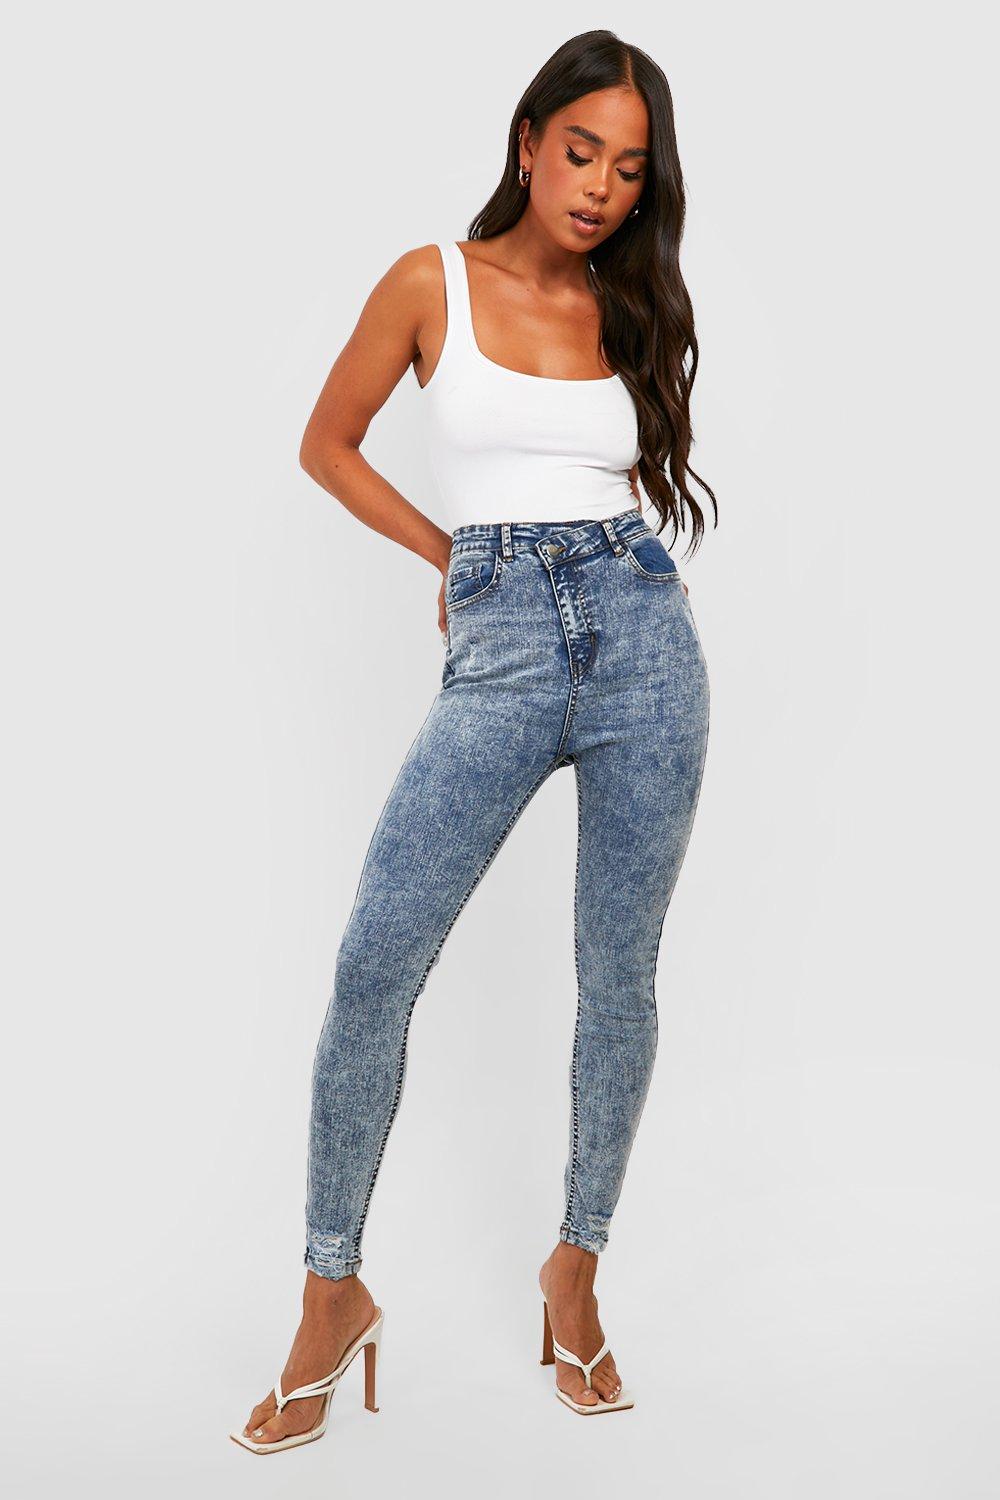 https://media.boohoo.com/i/boohoo/gzz35960_mid%20wash_xl_2/female-mid%20wash-petite-asymmetric-waist-detail-skinny-jeans